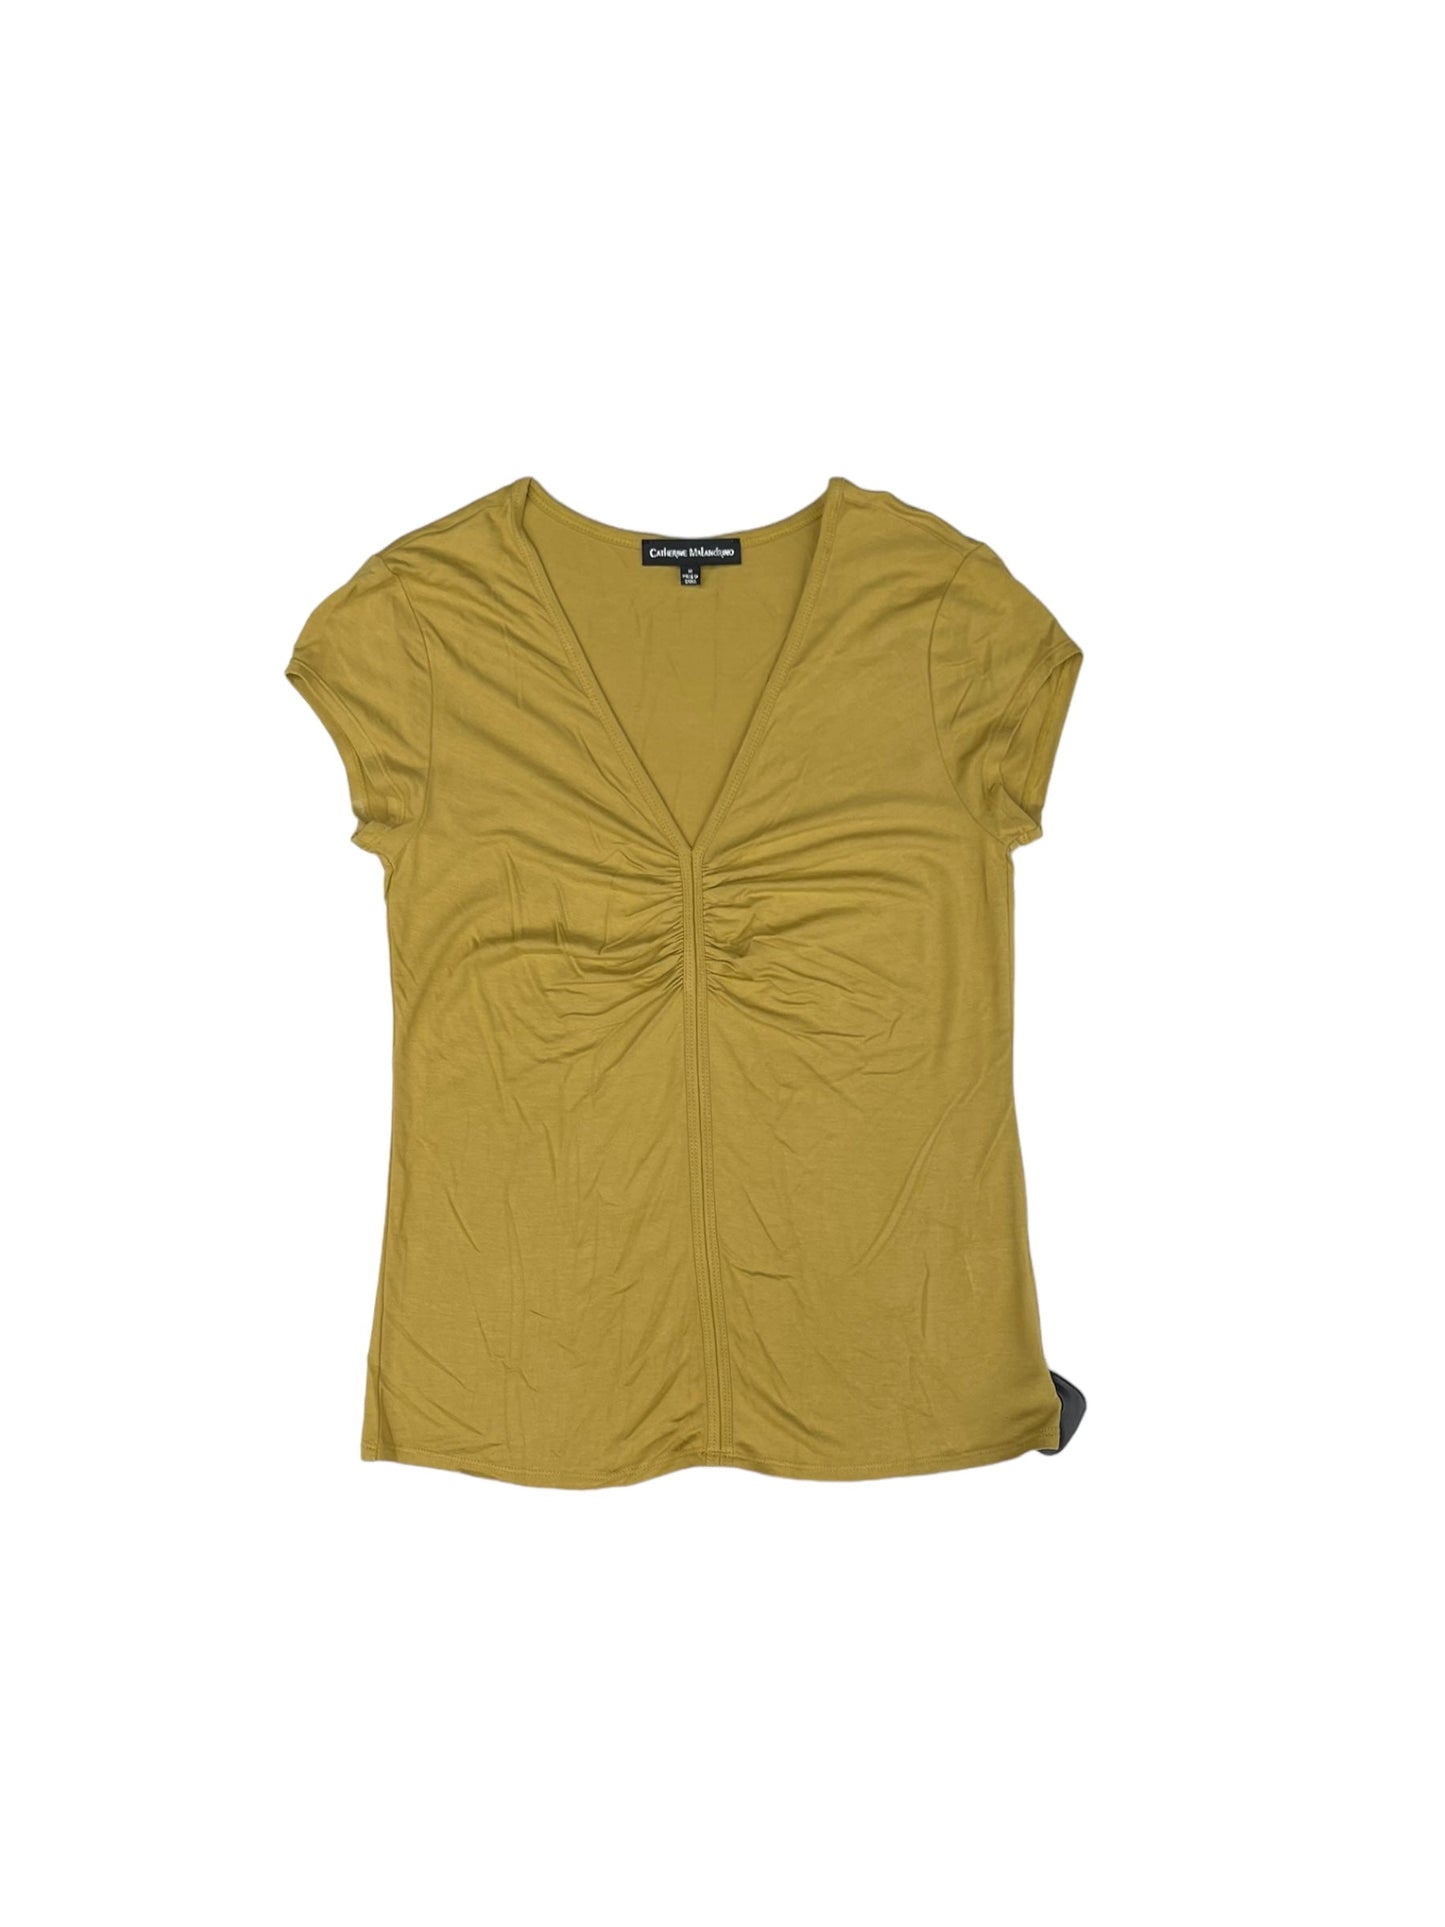 Yellow Top Short Sleeve Catherine Malandrino, Size M